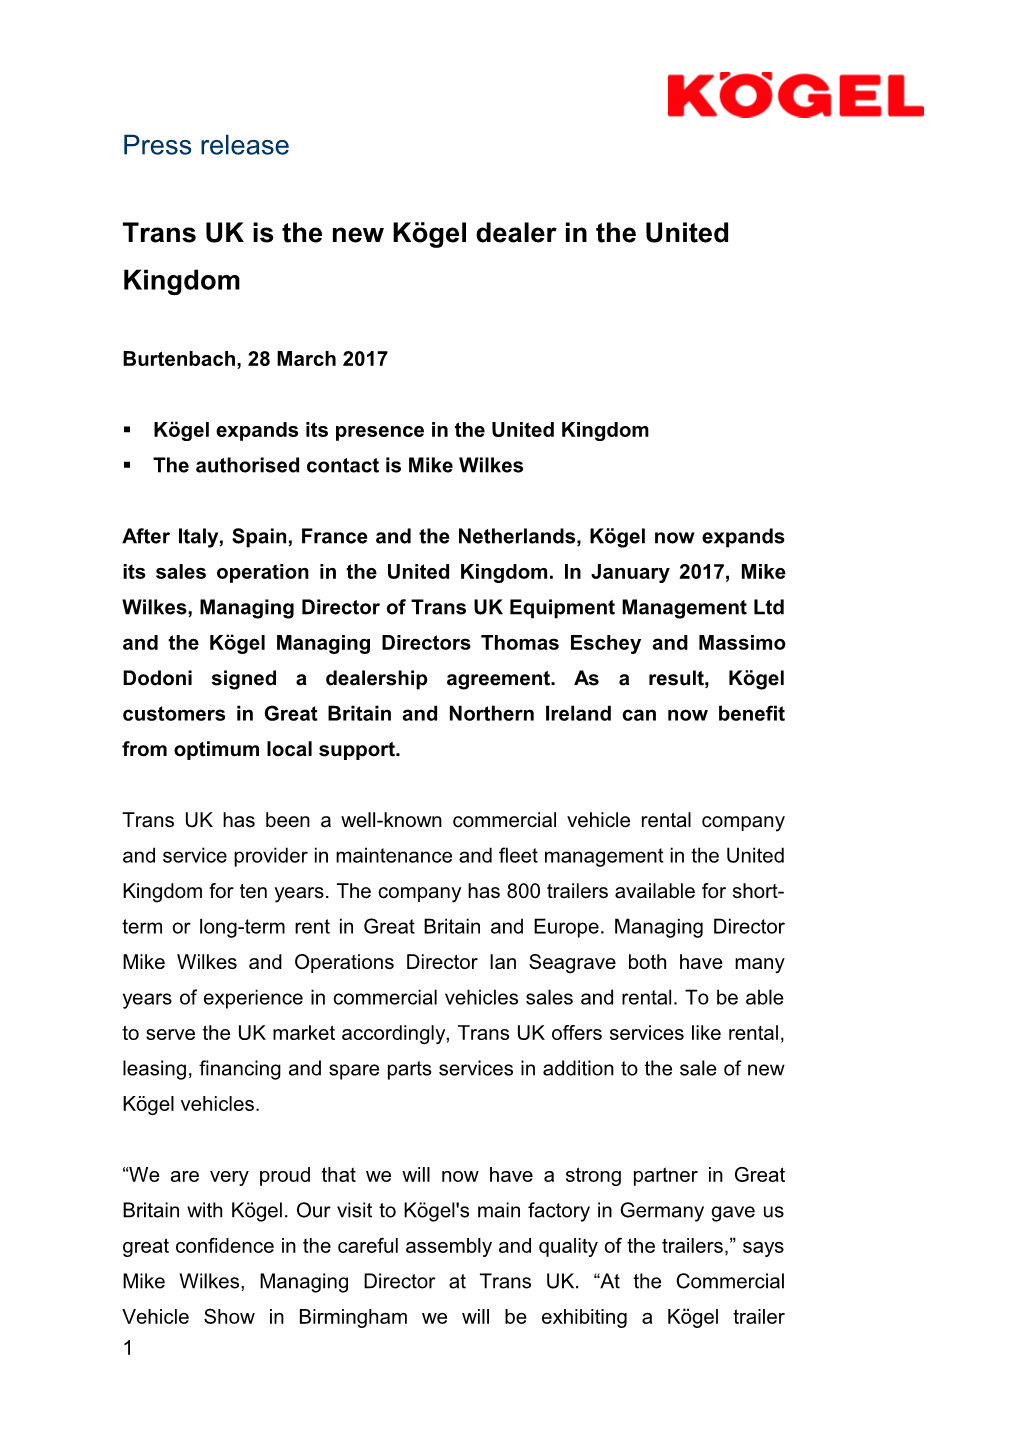 Trans UK Is the New Kögel Dealer in the United Kingdom